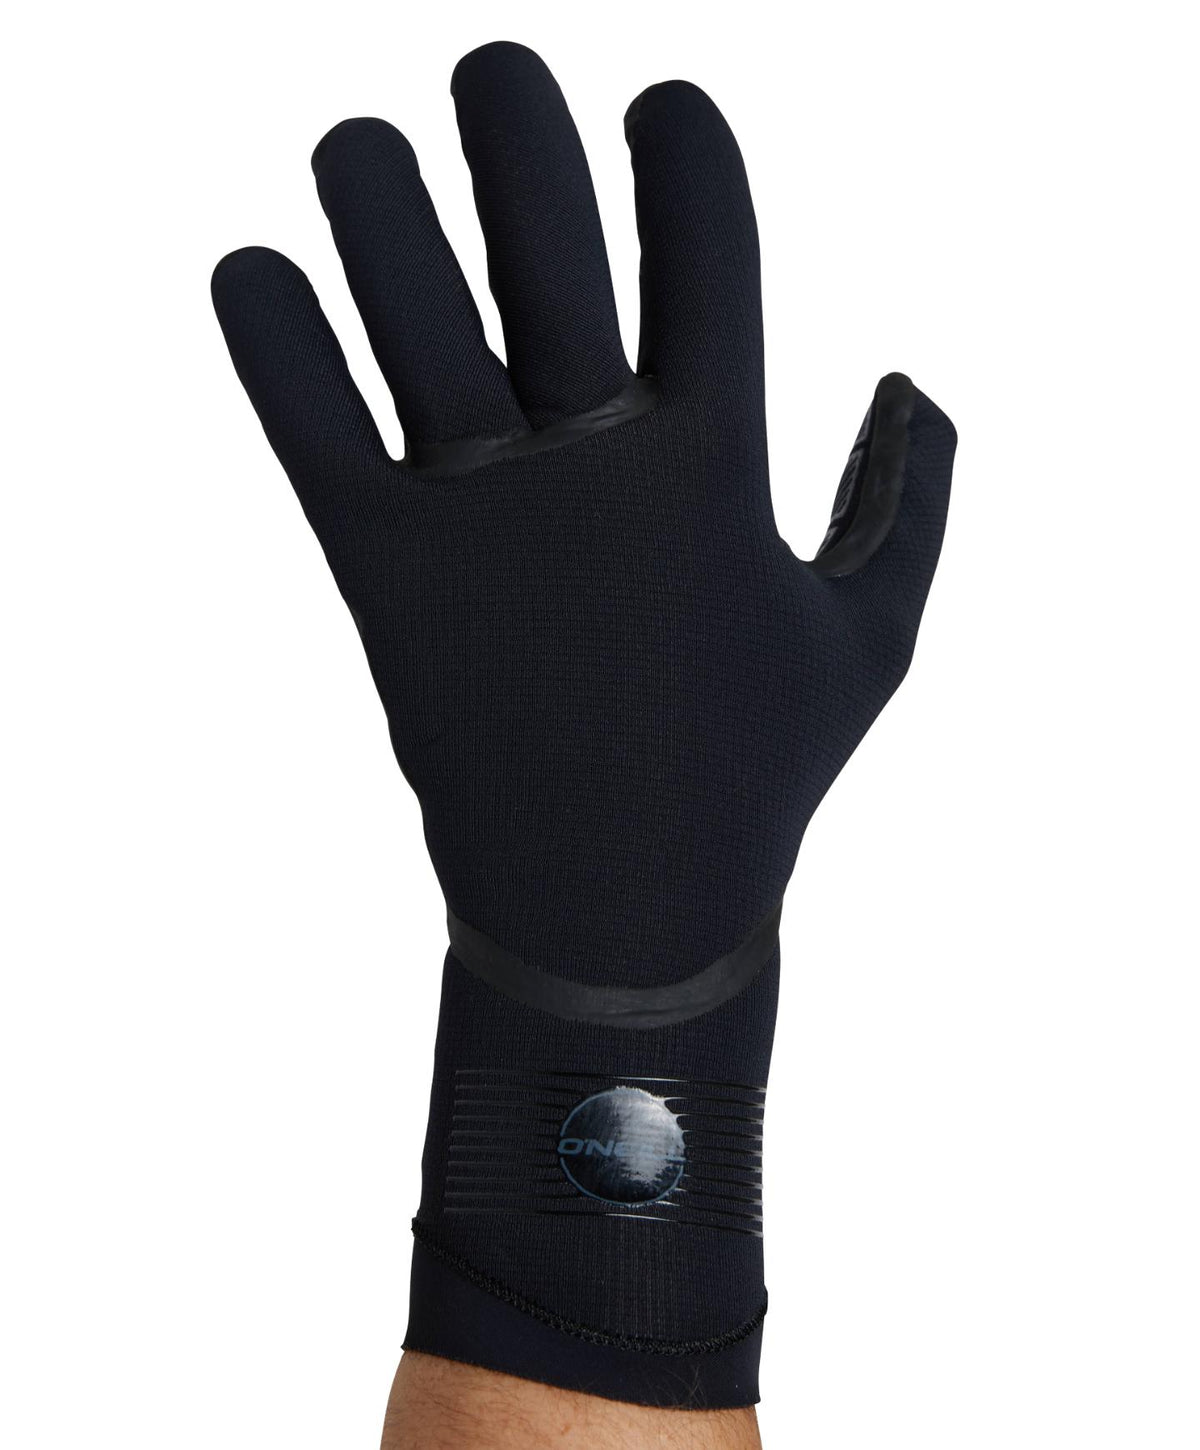 Psycho Tech 1.5mm Wetsuit Glove - Black